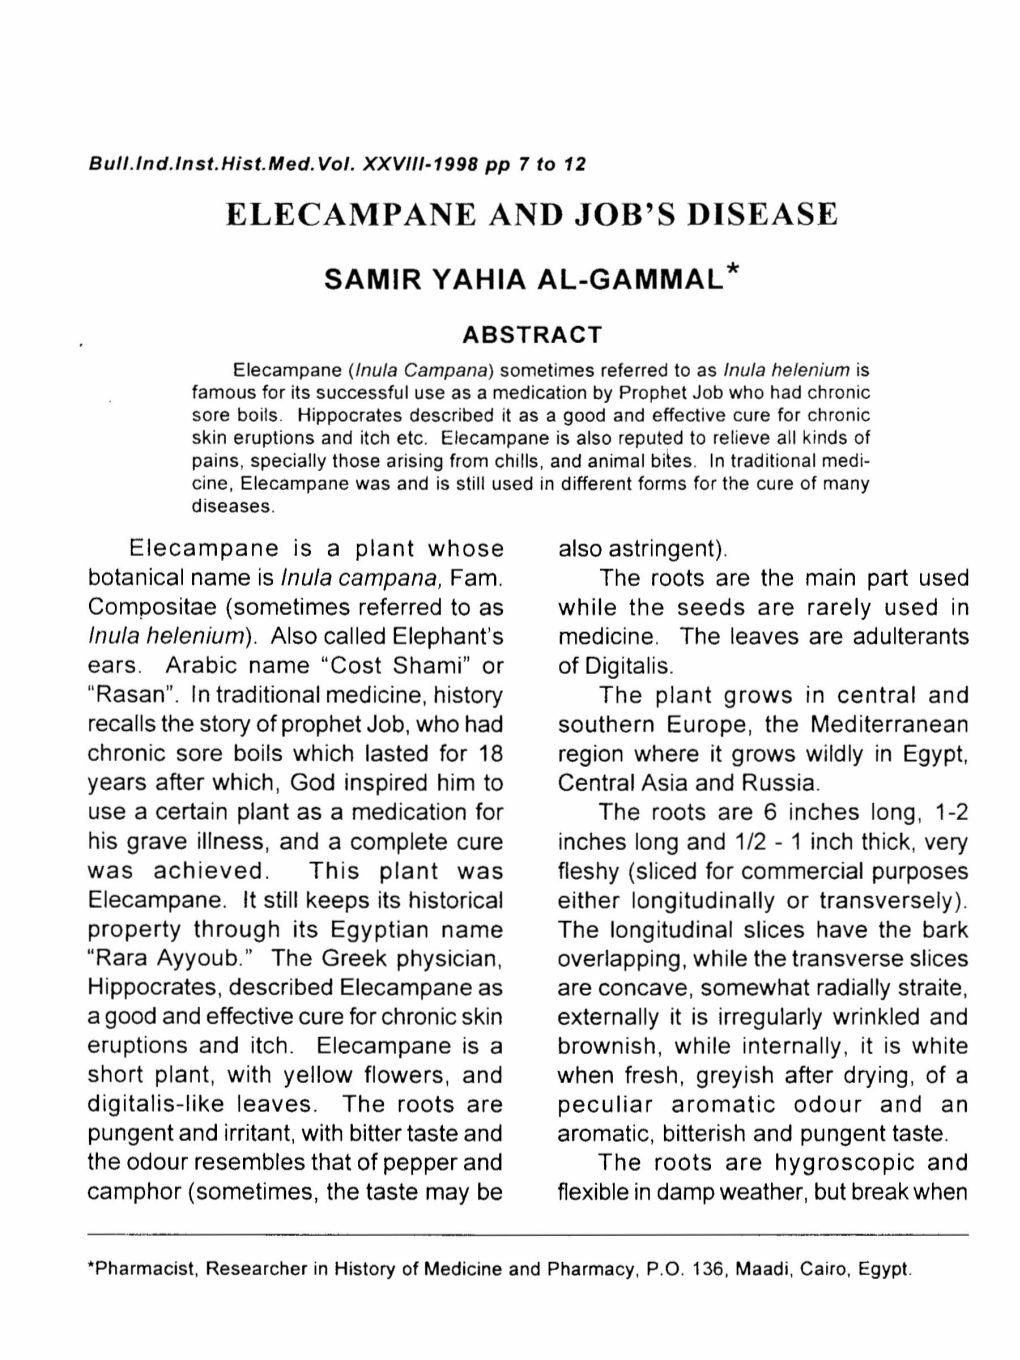 Elecampane and Job's Disease